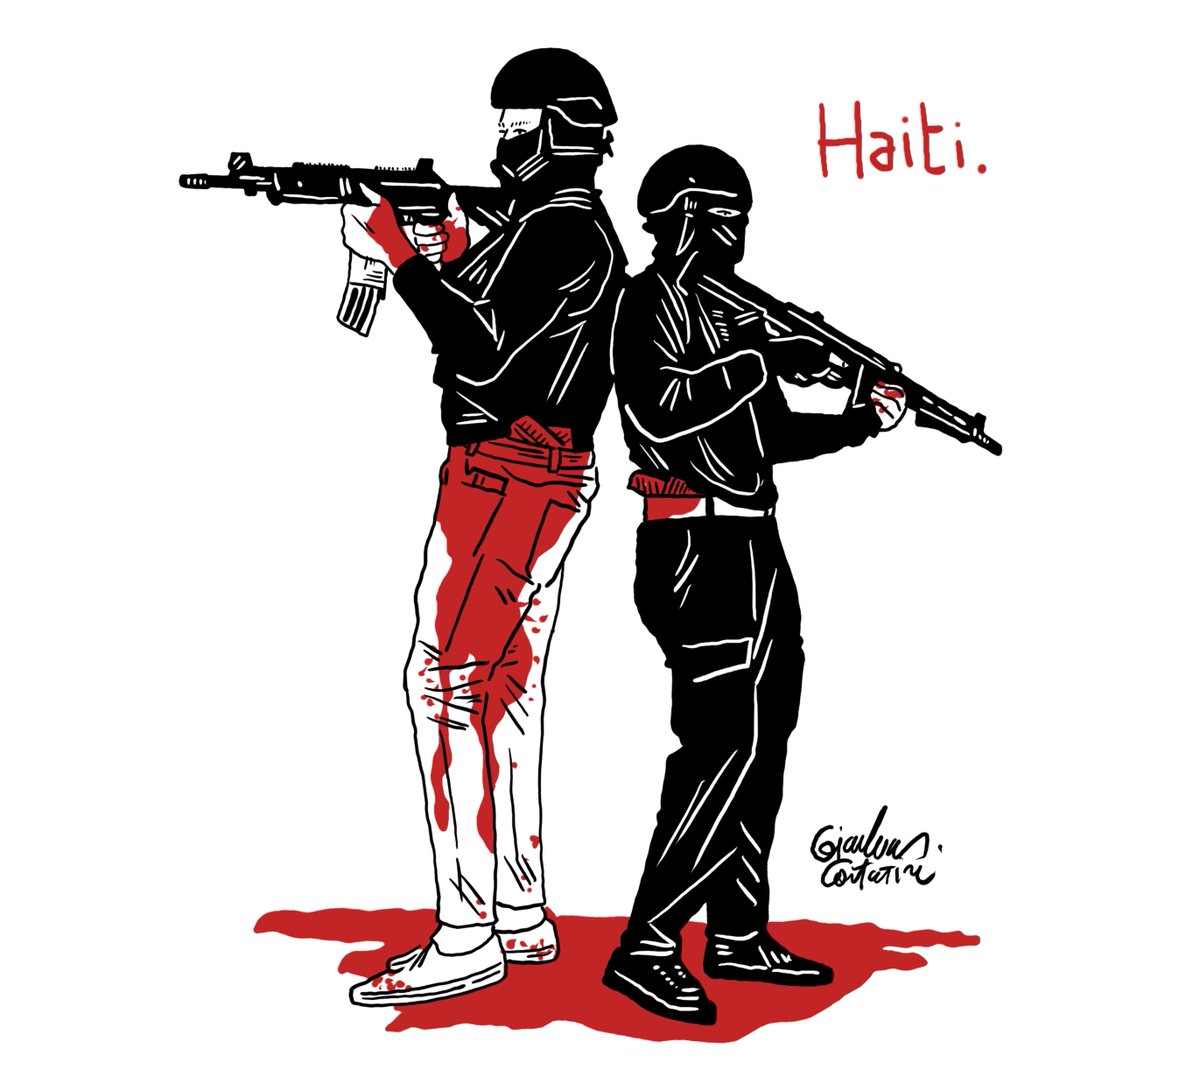 Haiti.

#Haiti #HaitiCrisis 
#HaitiGangViolence